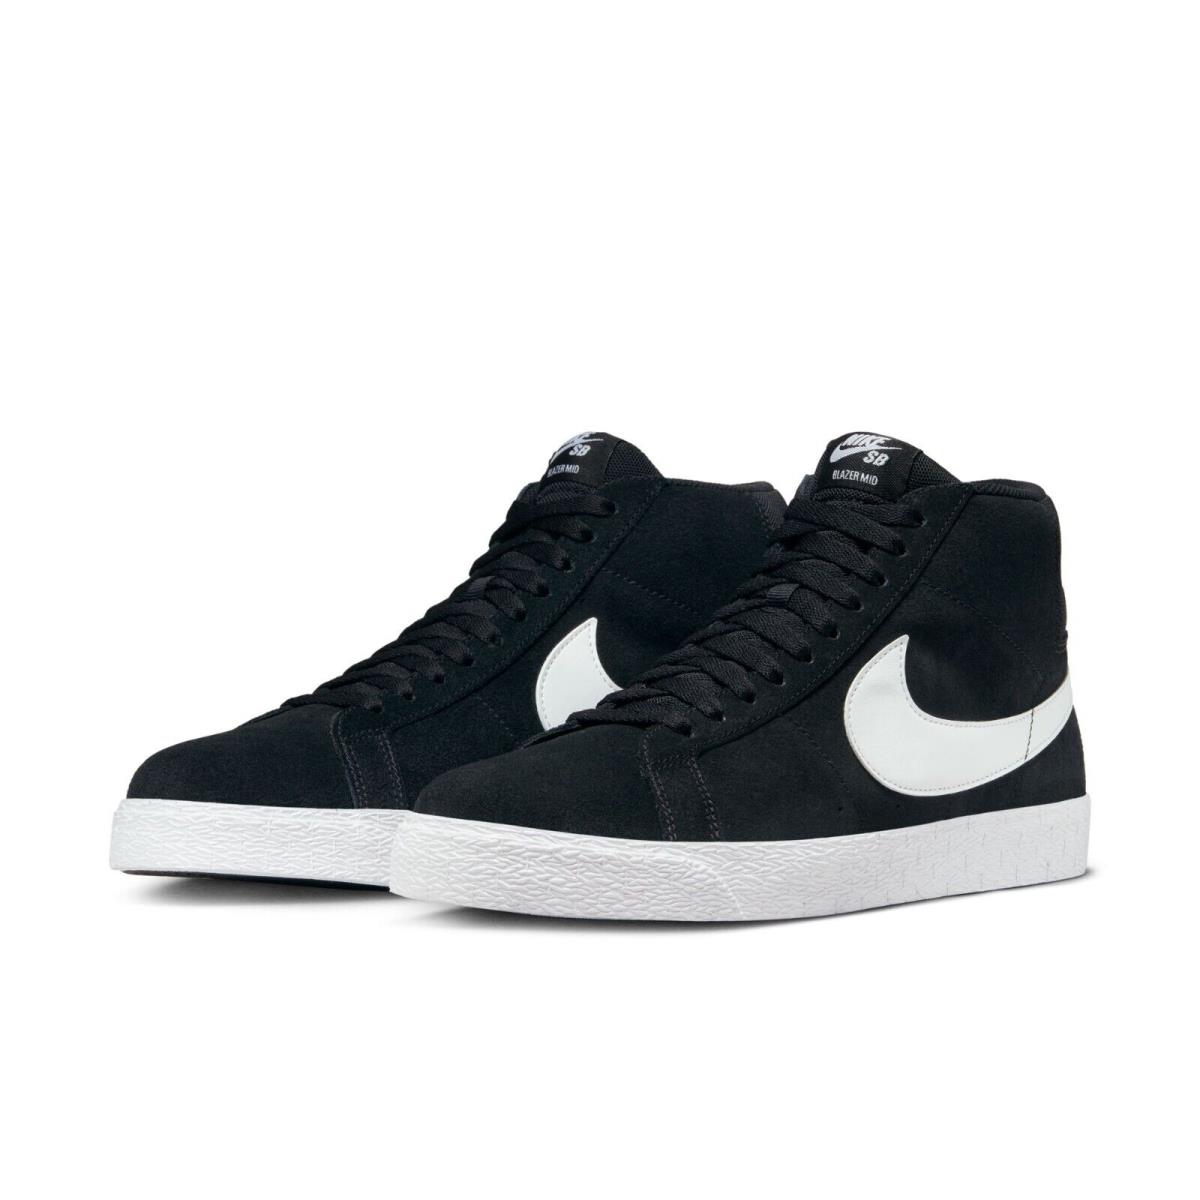 Nike SB Zoom Blazer Mid Shoes - Black/white - Sizes 8-11 - Black